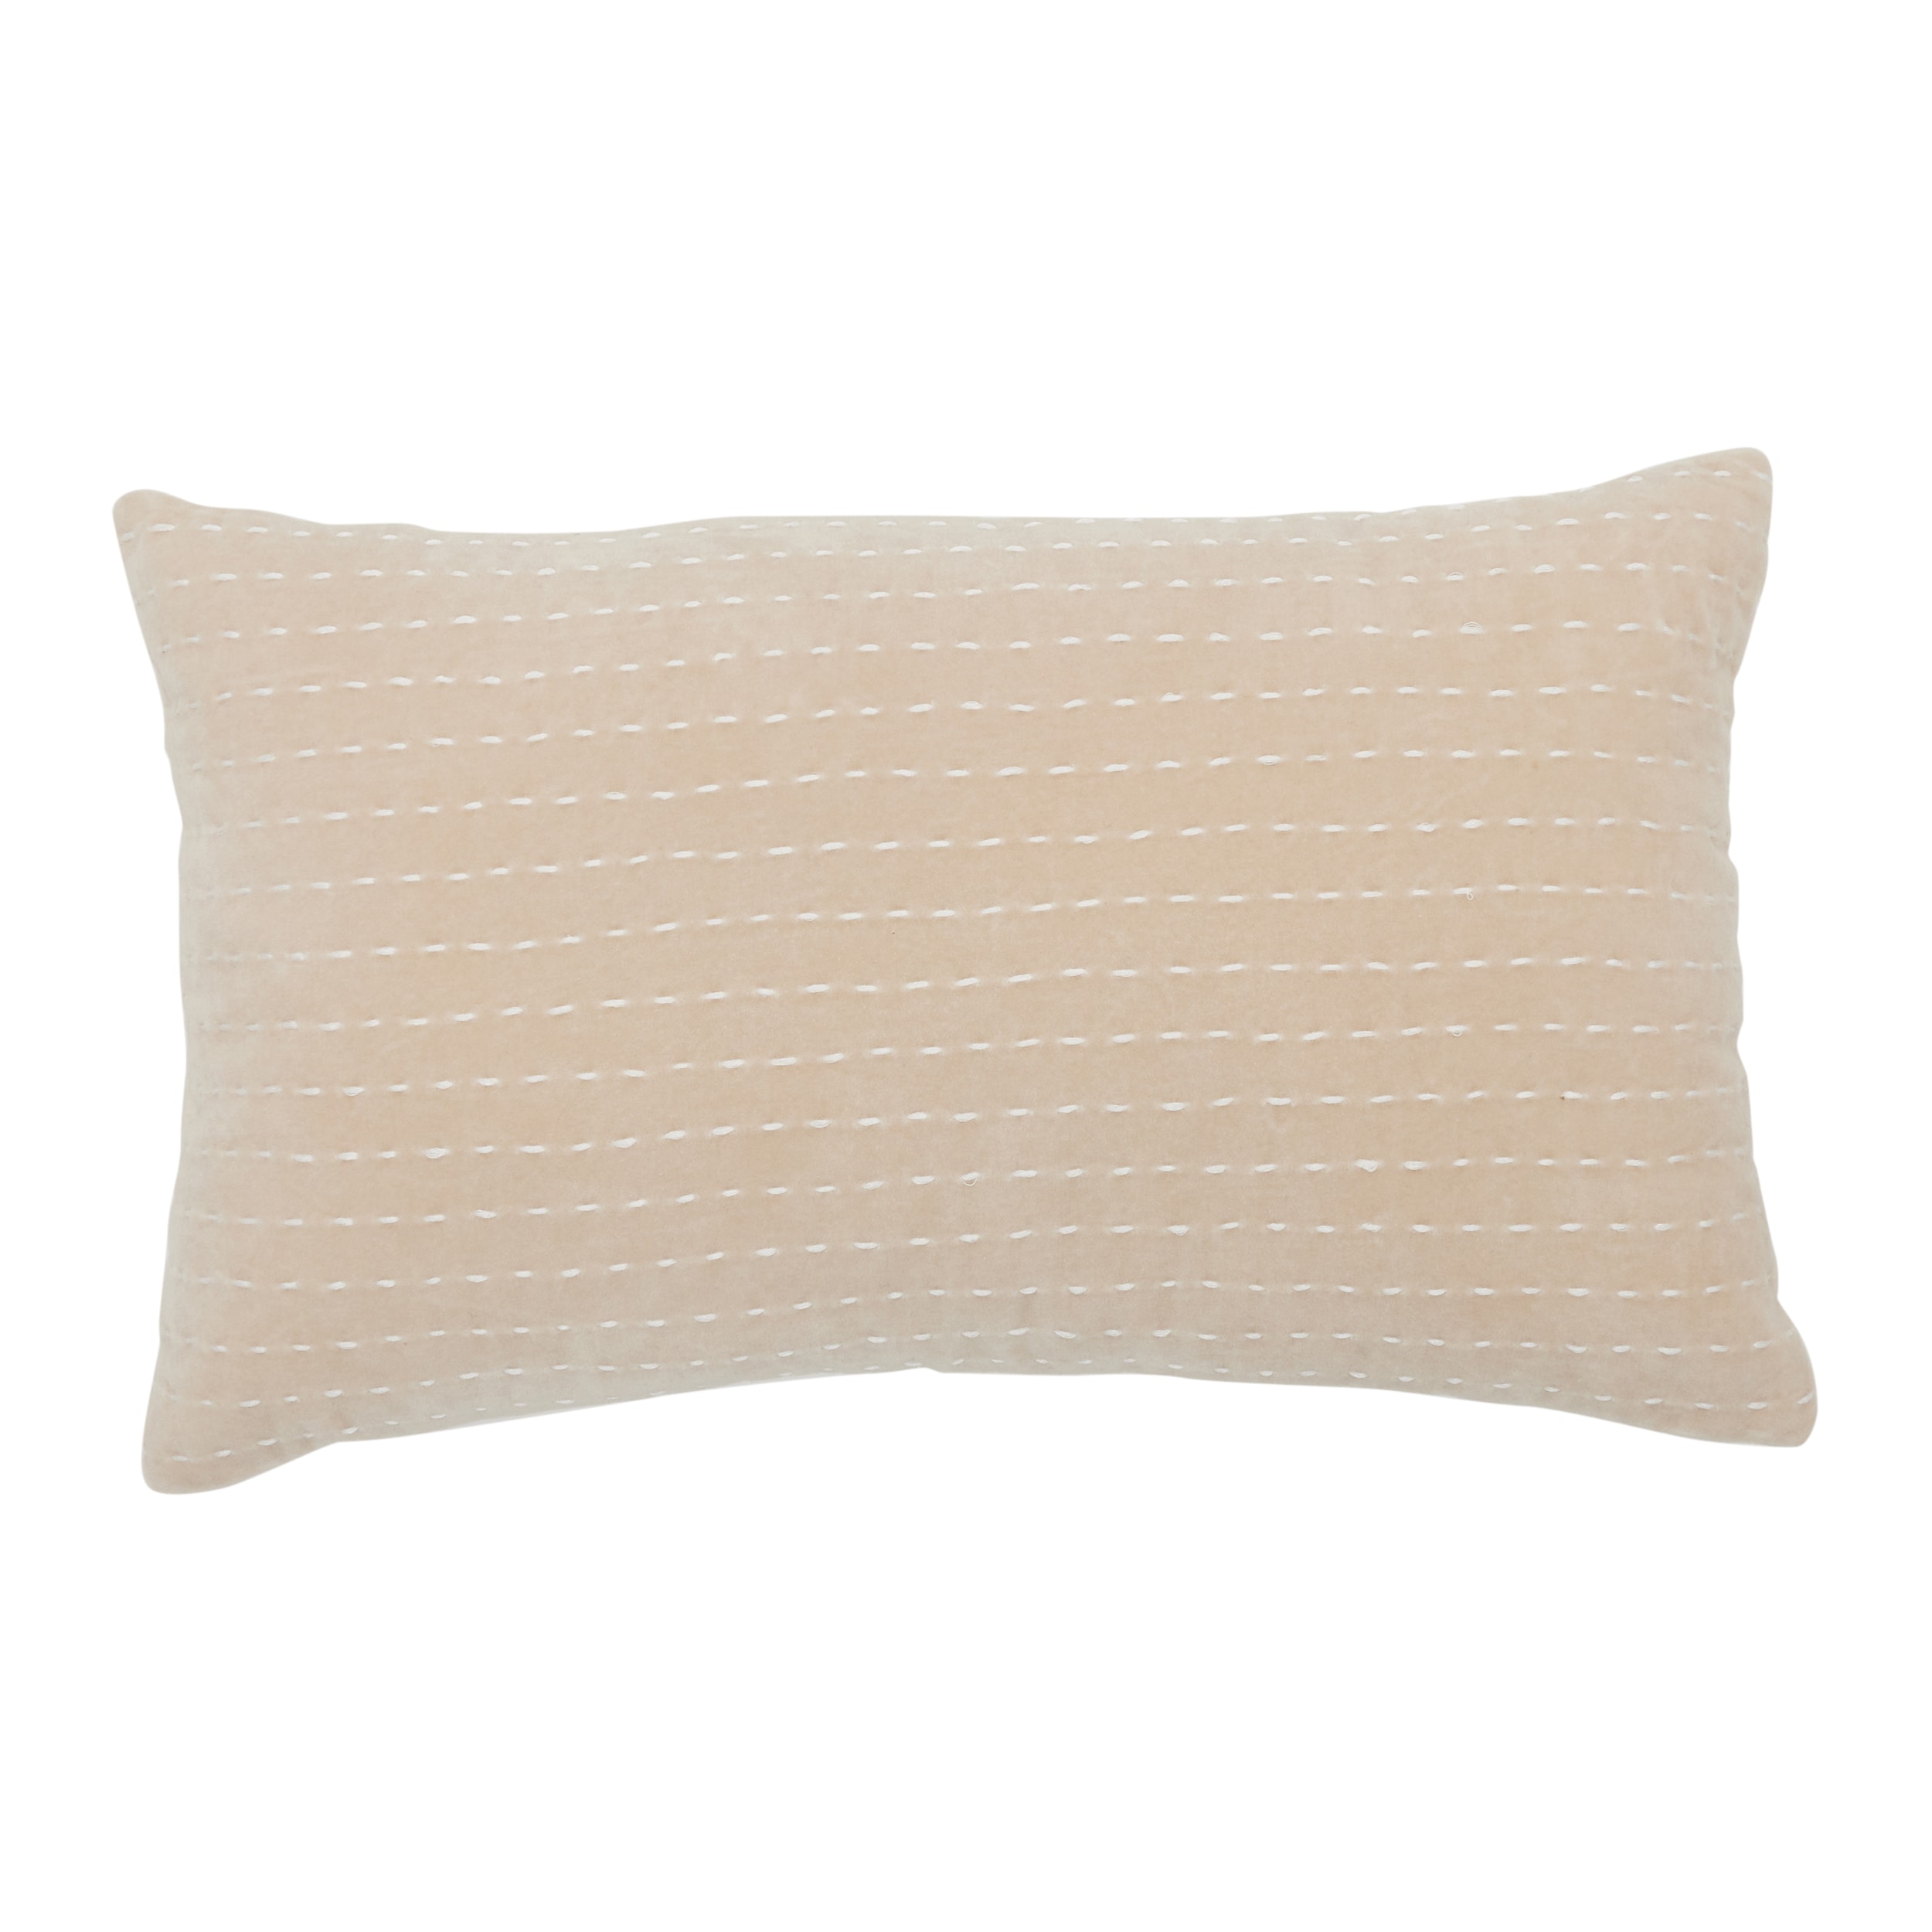 Sheldon Pleat Decorative Pillow - 20 x 20 / Autumn Leaf